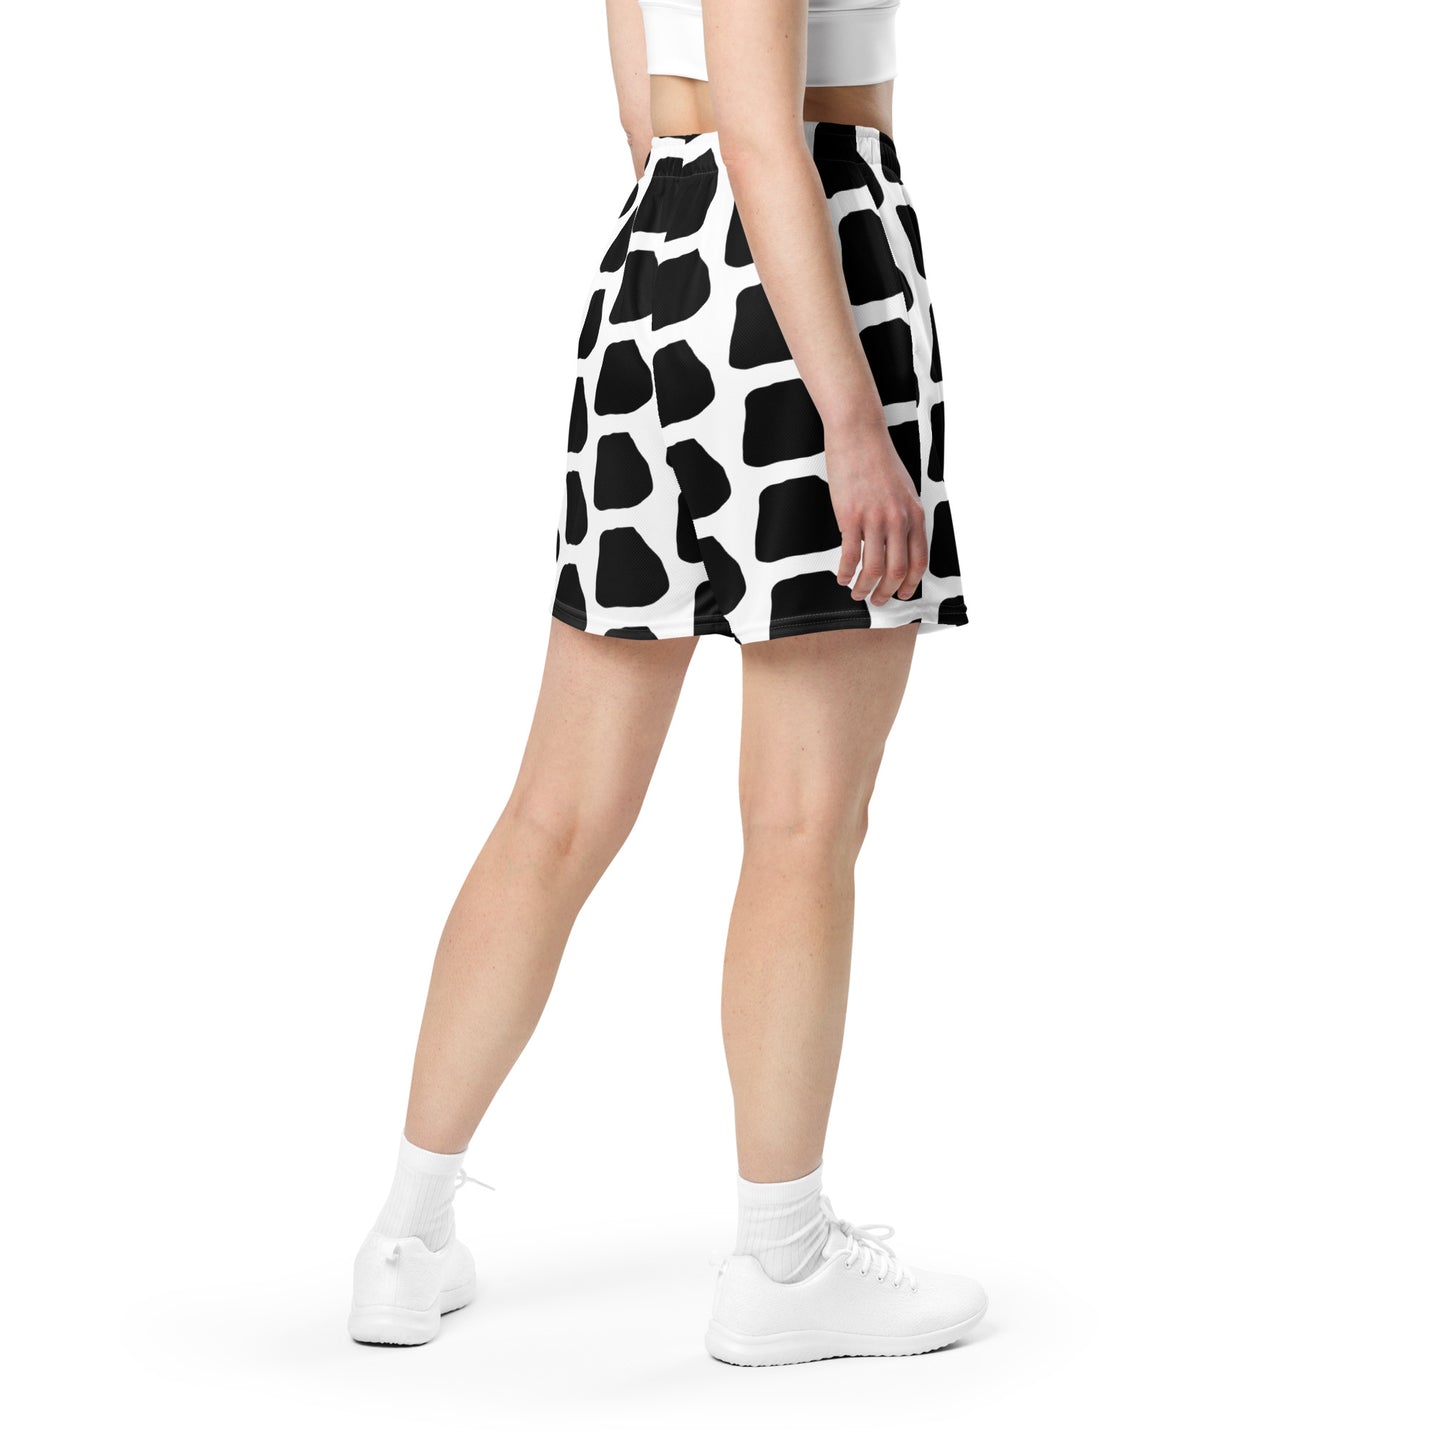 Mesh shorts- Black & White Giraffe - DMD Bags